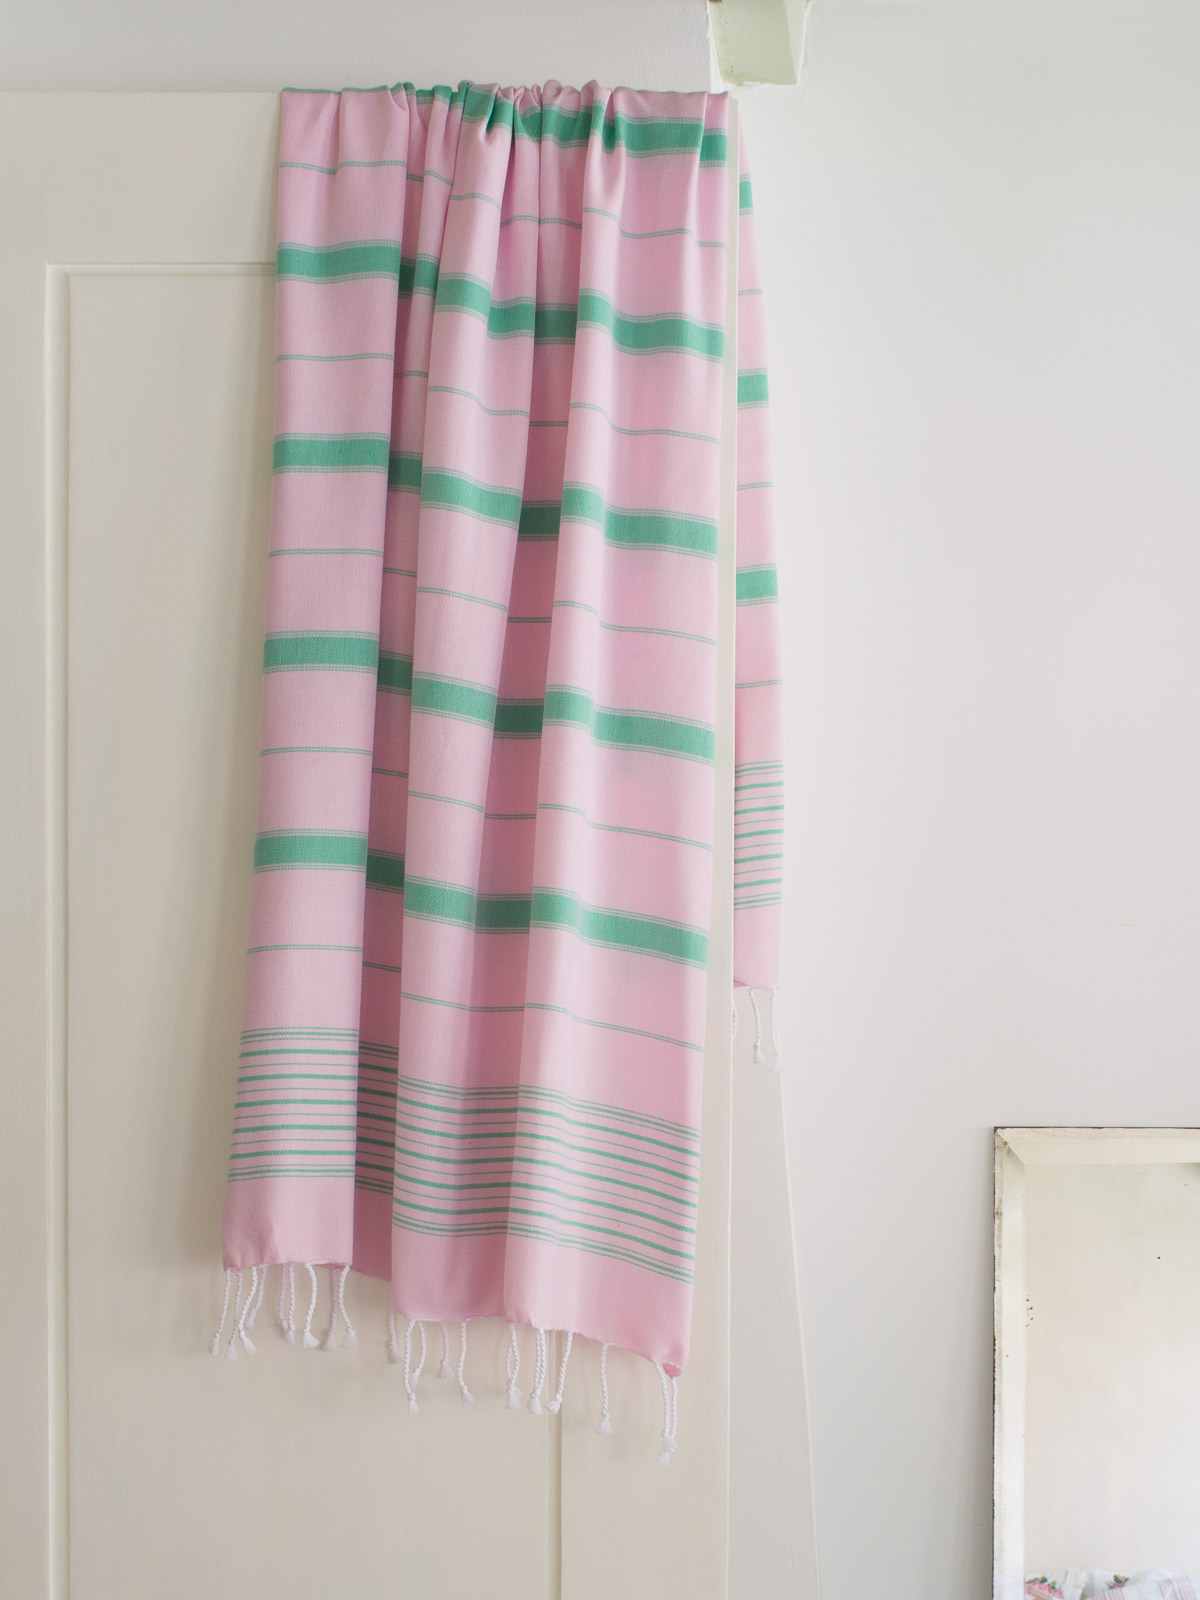 hammam towel pink/jade green 170x100cm